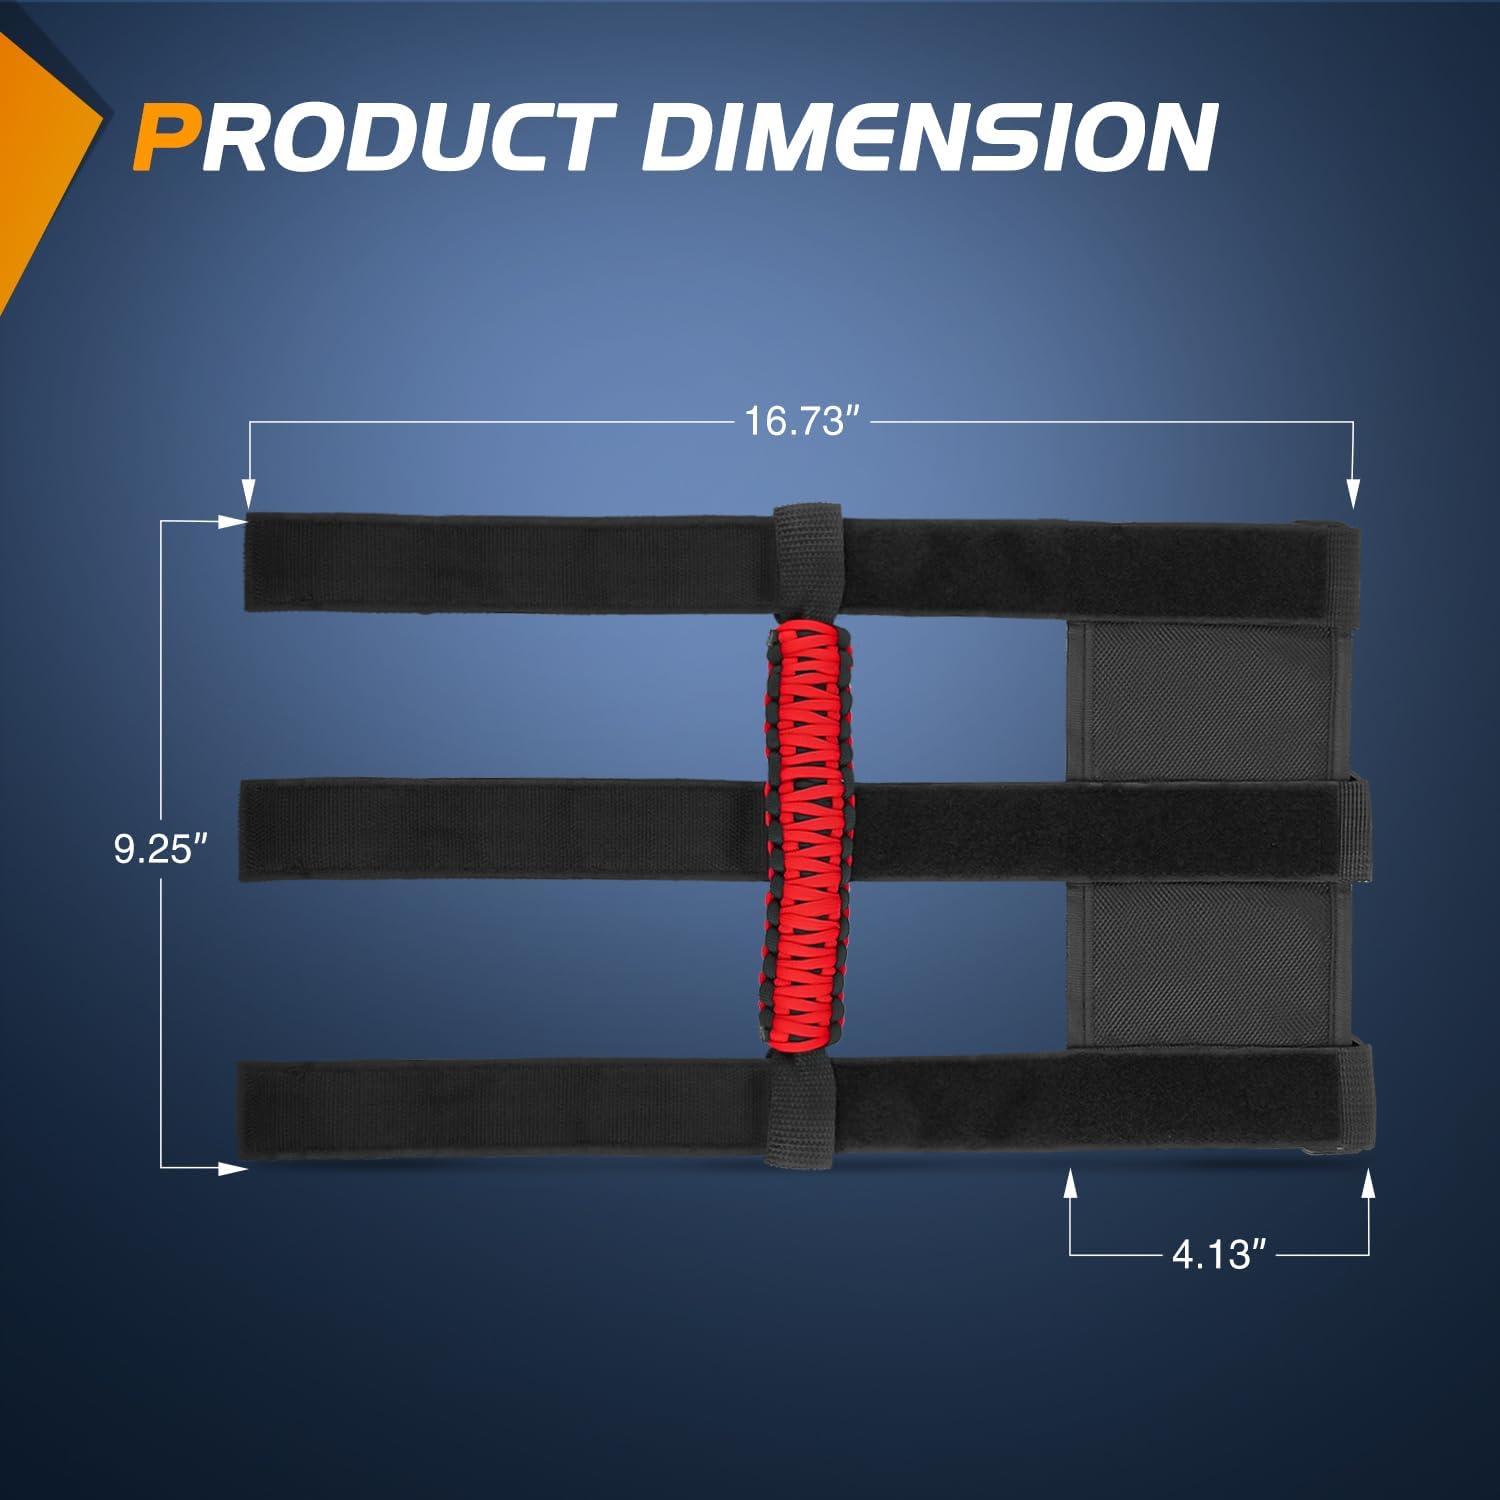 Grab Handles Black Red Universal 2”- 4” Roll Bar Mount 4PCS Nilight